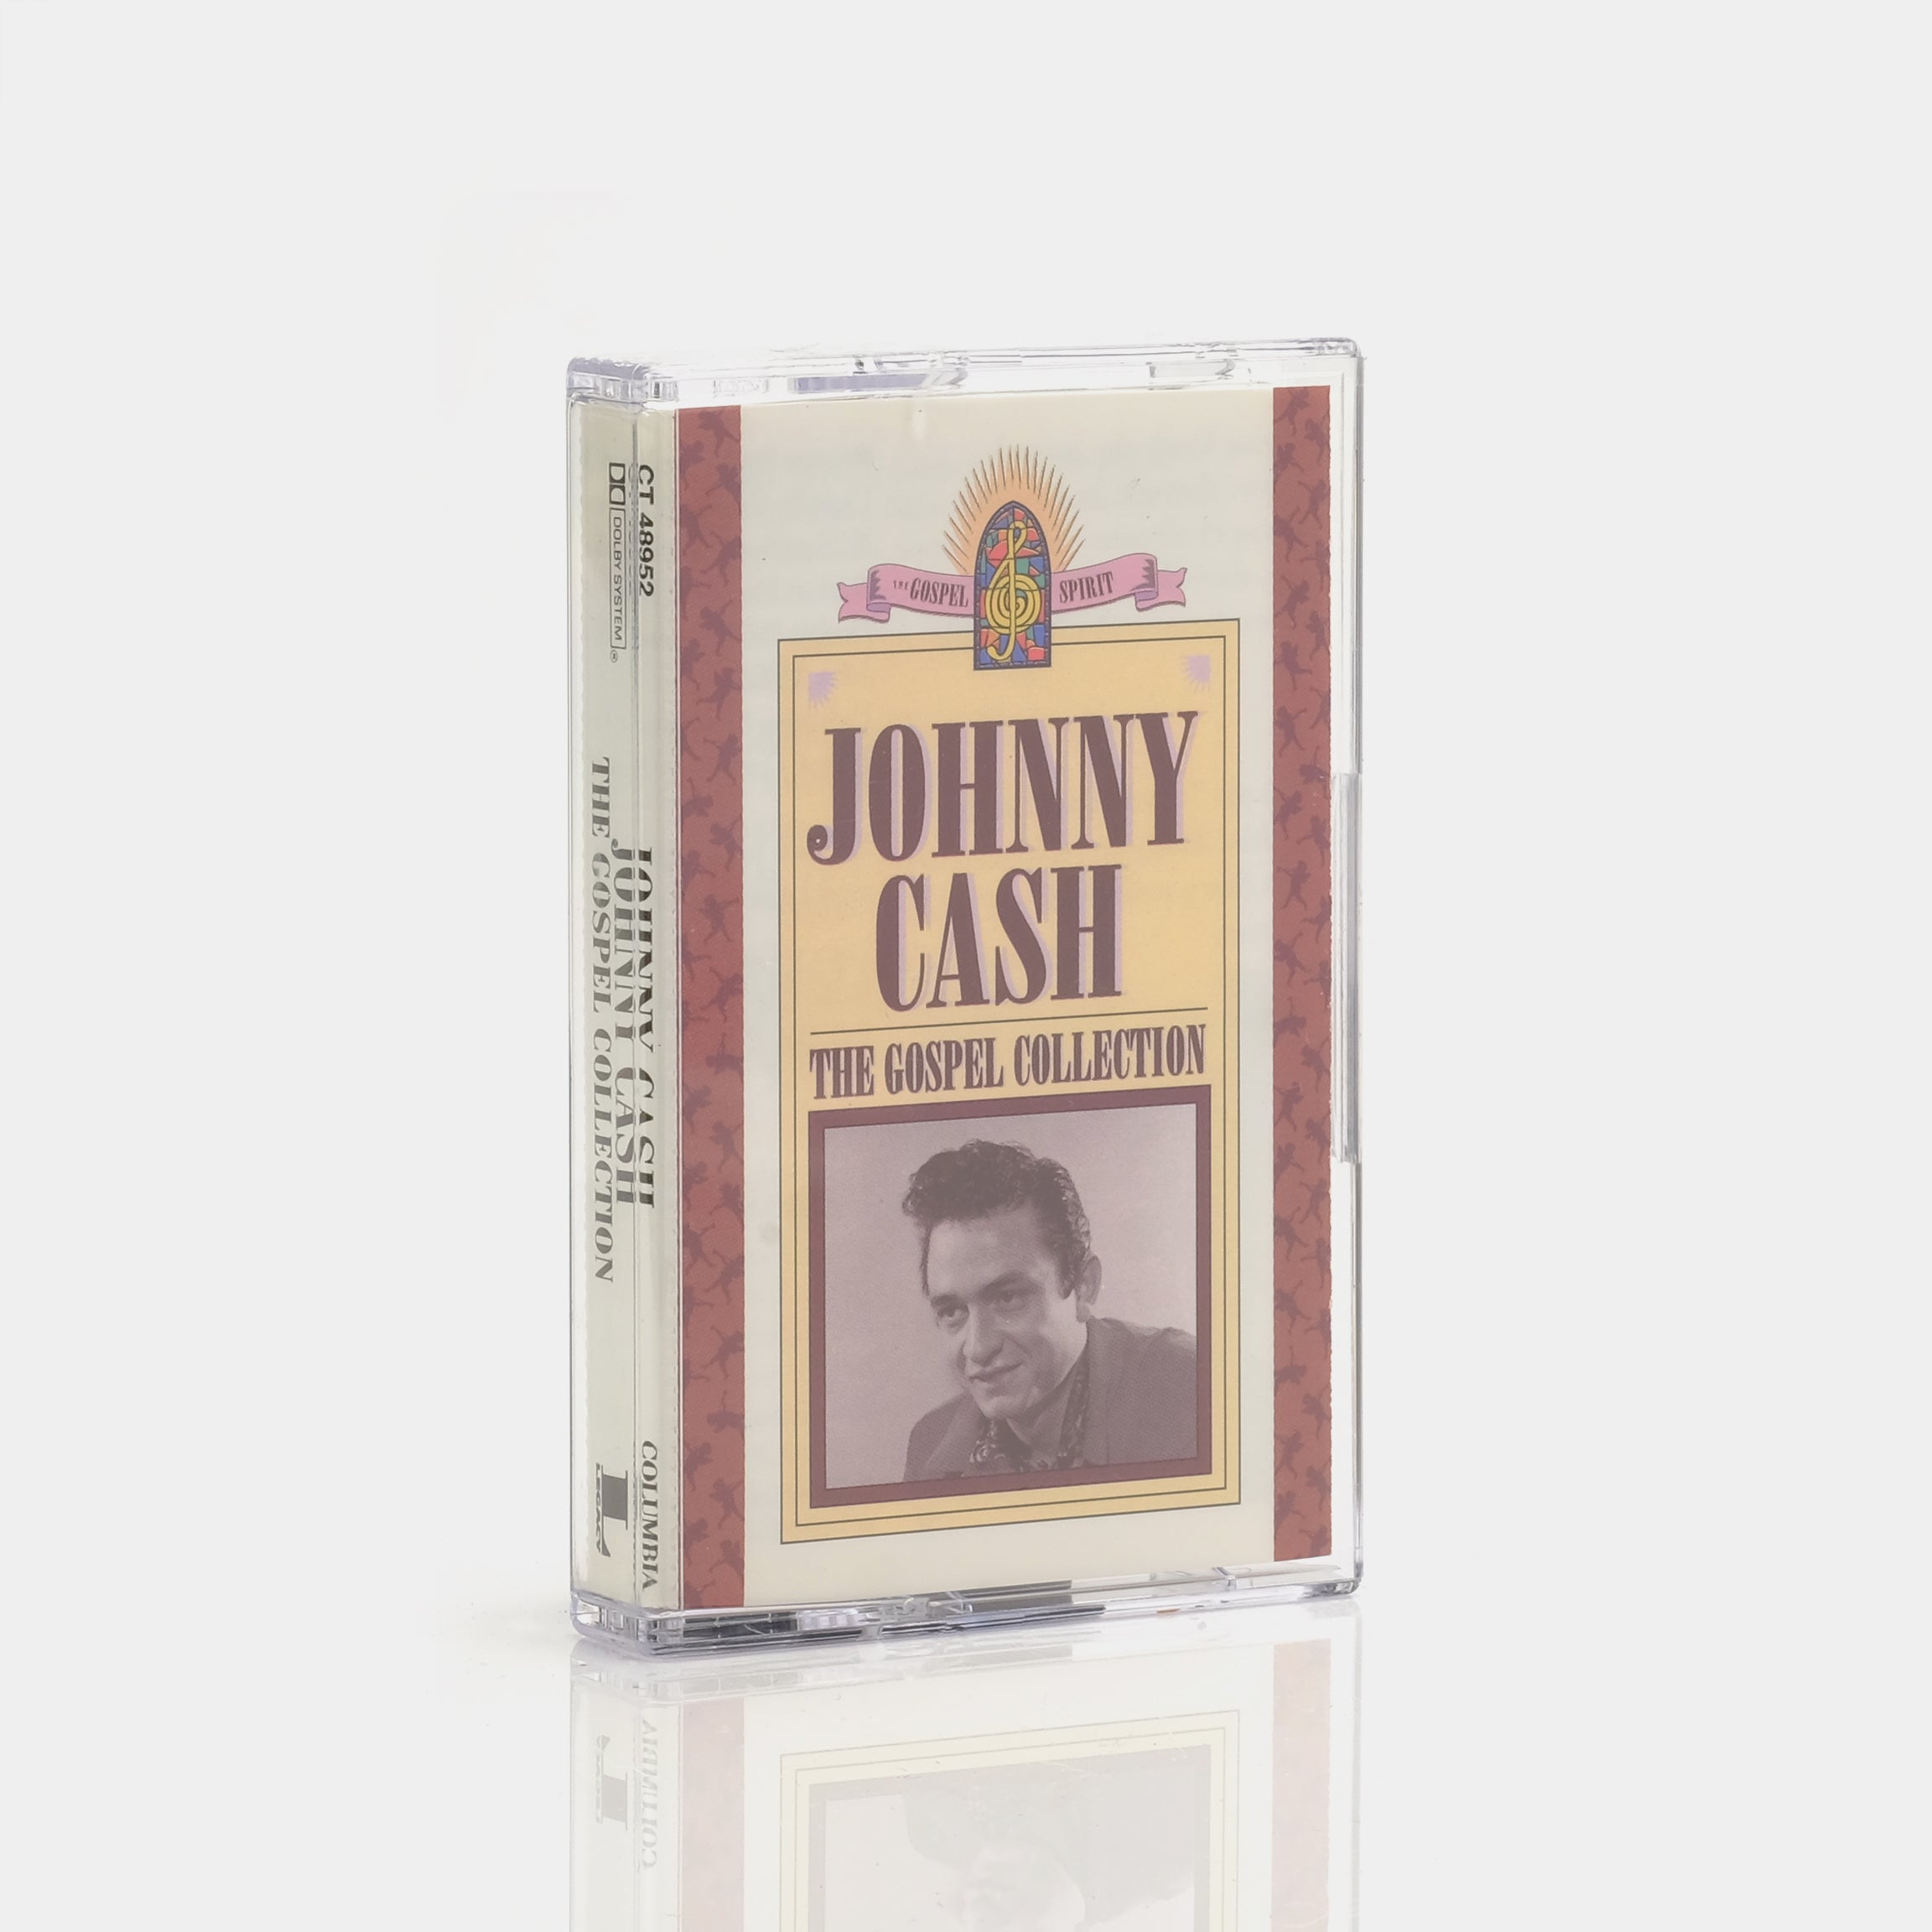 Johnny Cash - The Gospel Collection Cassette Tape